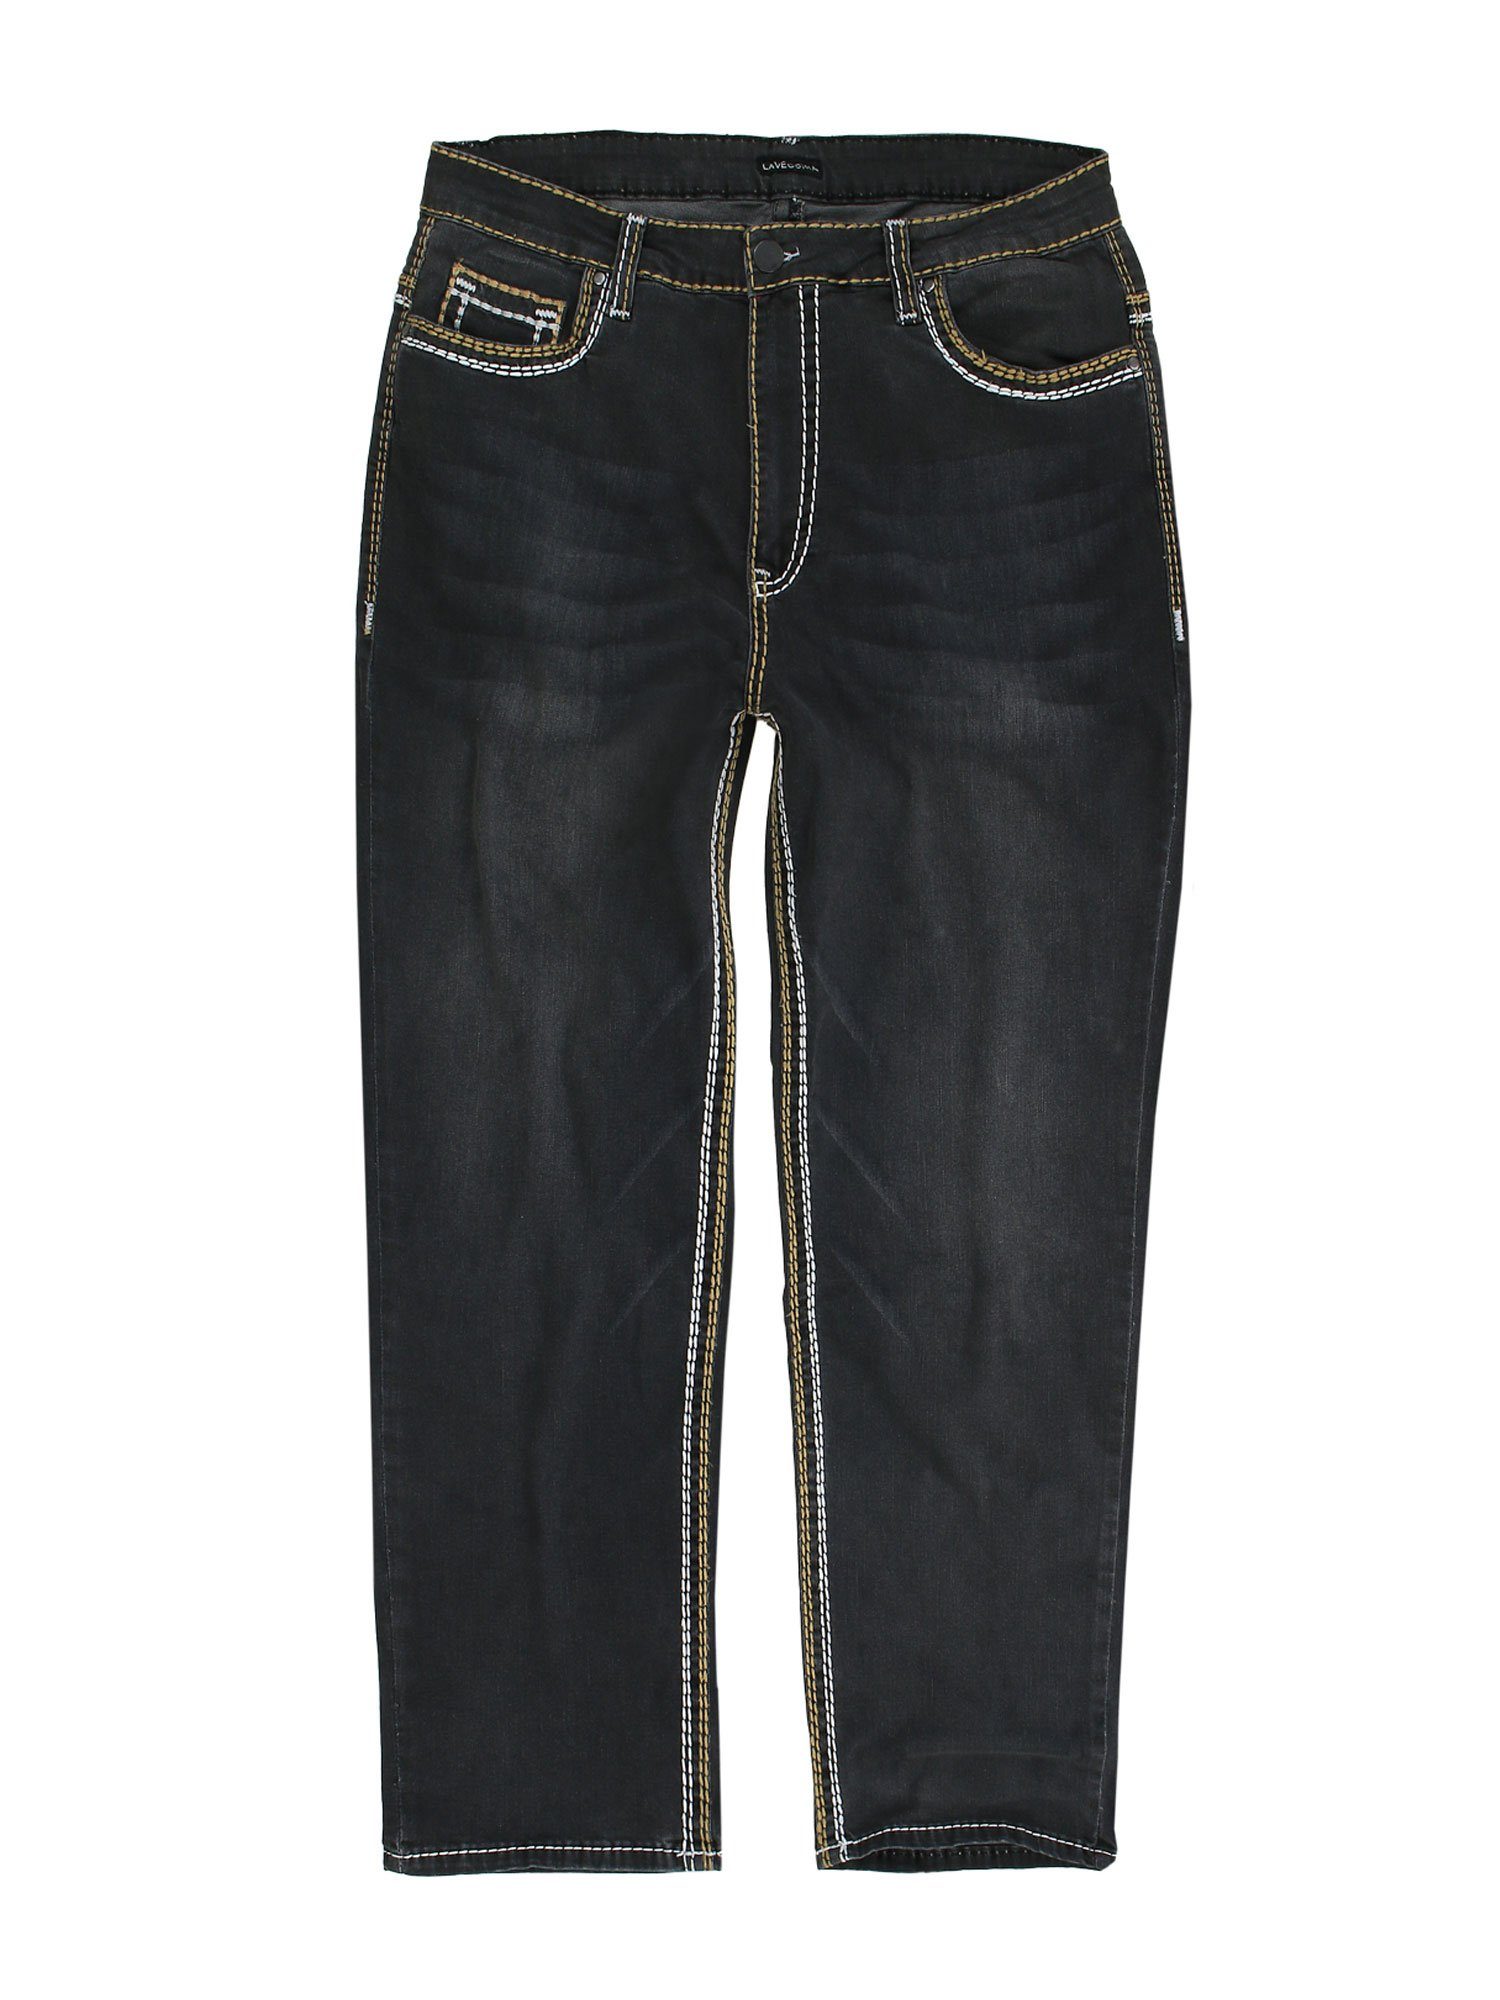 Jeanshose Übergrößen Lavecchia dicker Stretch Herren mit Comfort-fit-Jeans Naht & Elasthan LV-503 stone-black